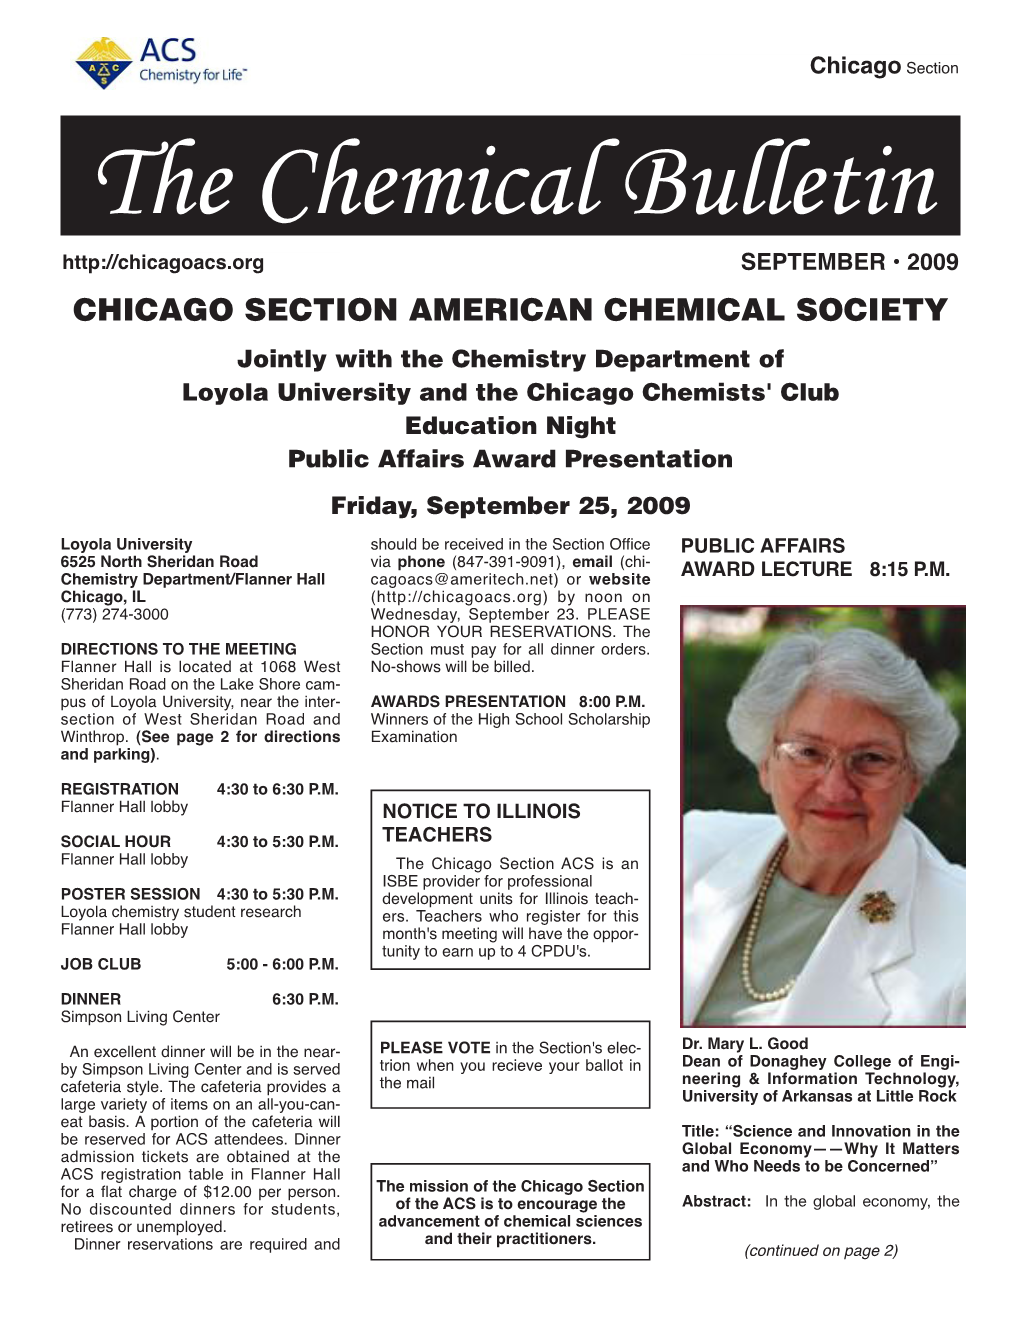 The Chemical Bulletin